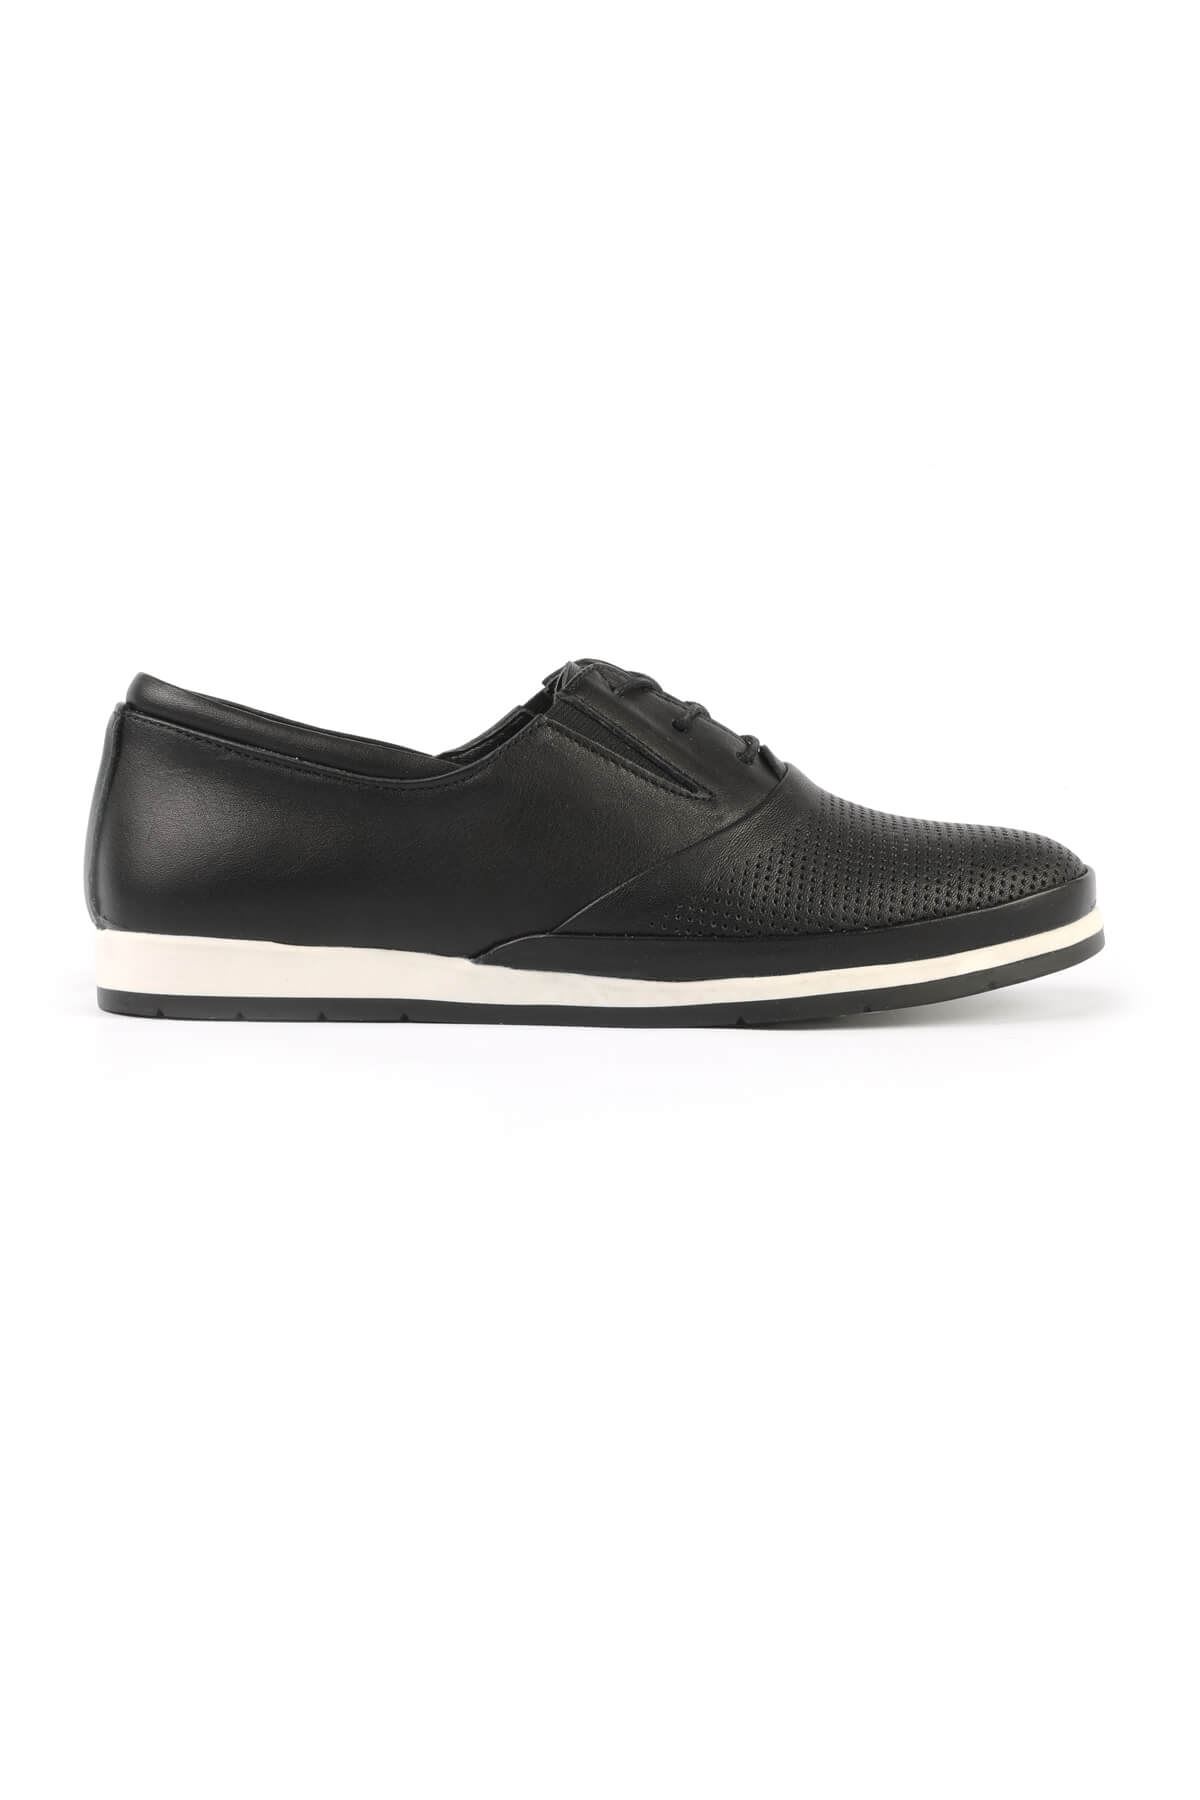 Libero FMS201 Black Casual Shoes